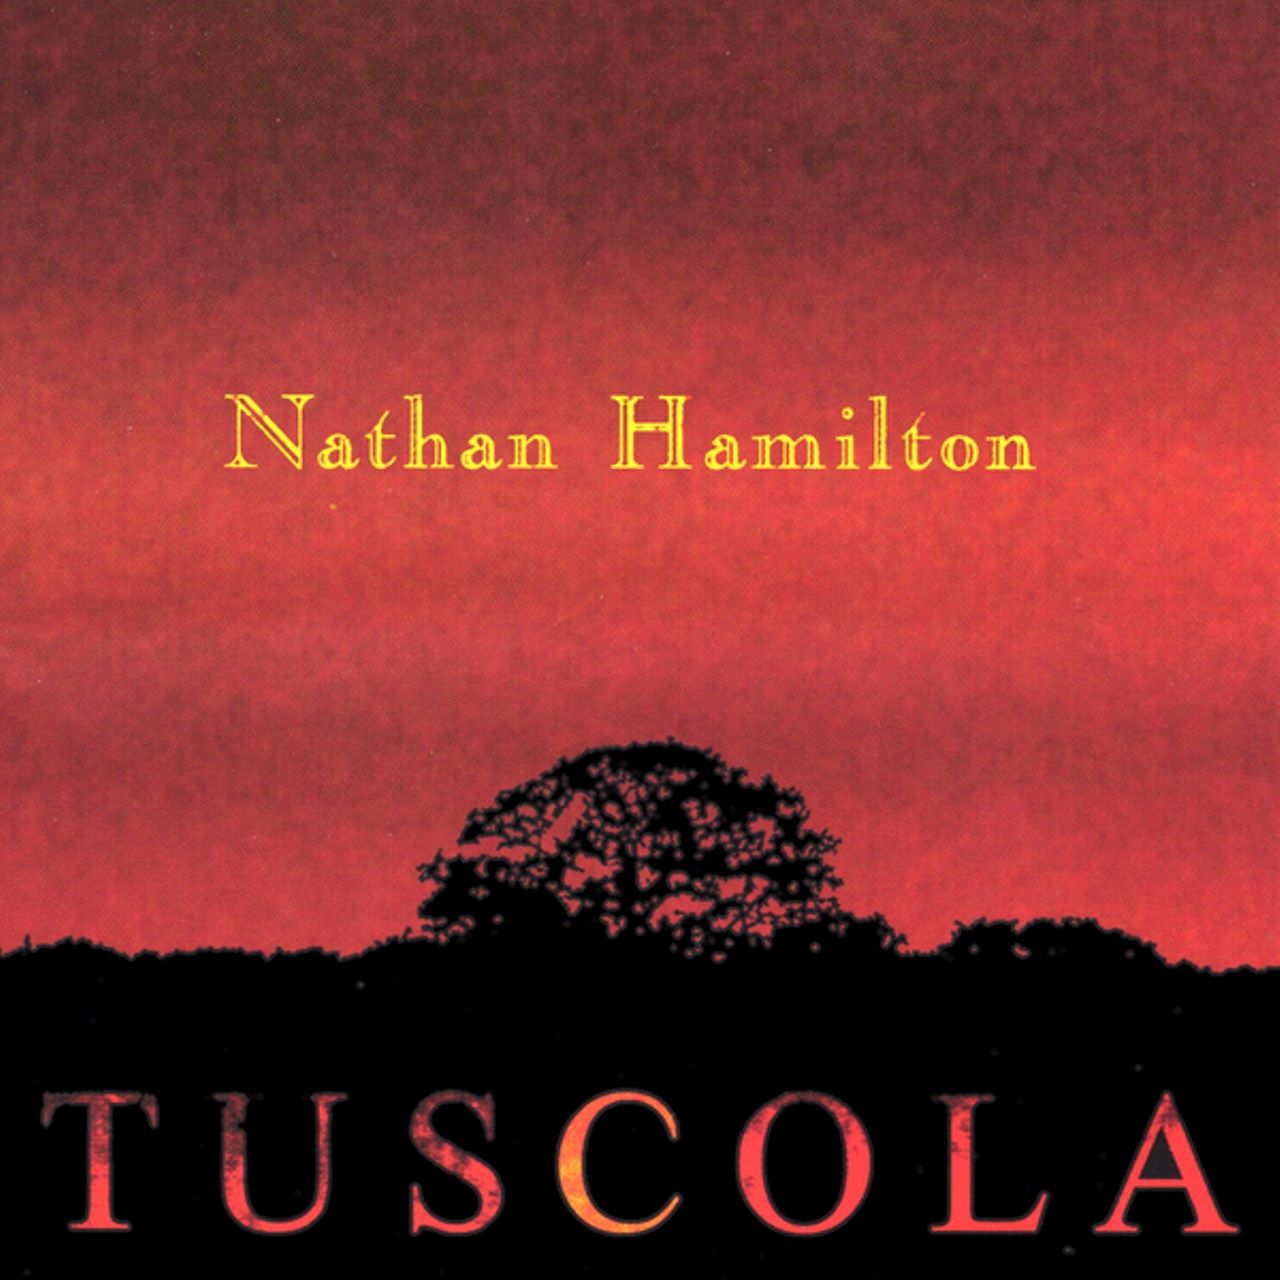 Nathan Hamilton - Tuscola cover album